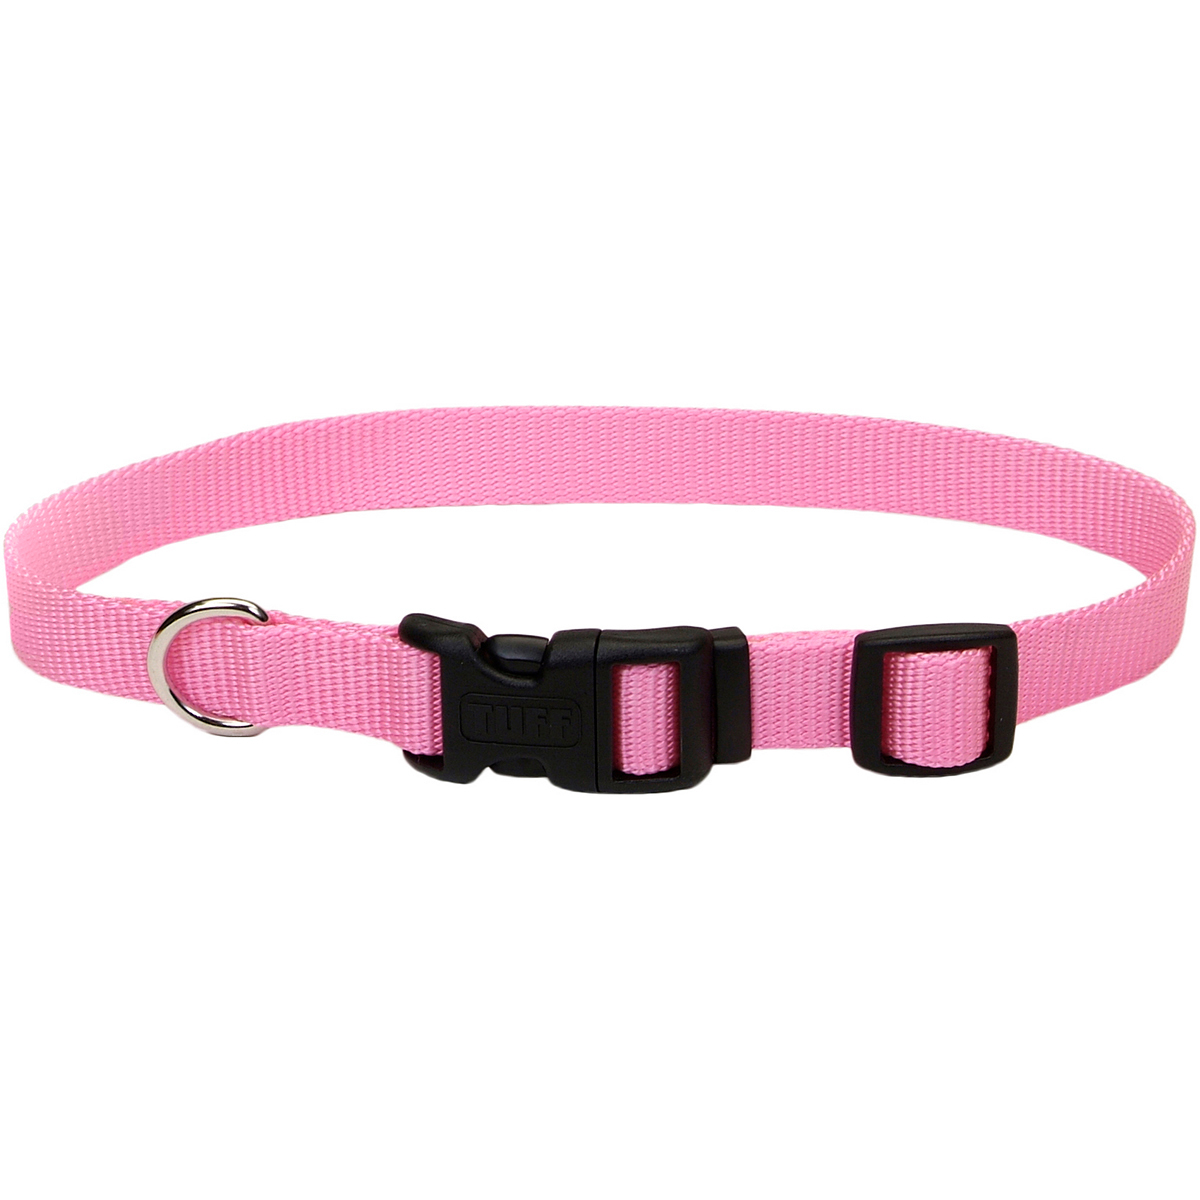 06601-pkb20 0.75 X 14 - 20 In. Adjustable Nylon Dog Collar With Tuff Buckle, Pink